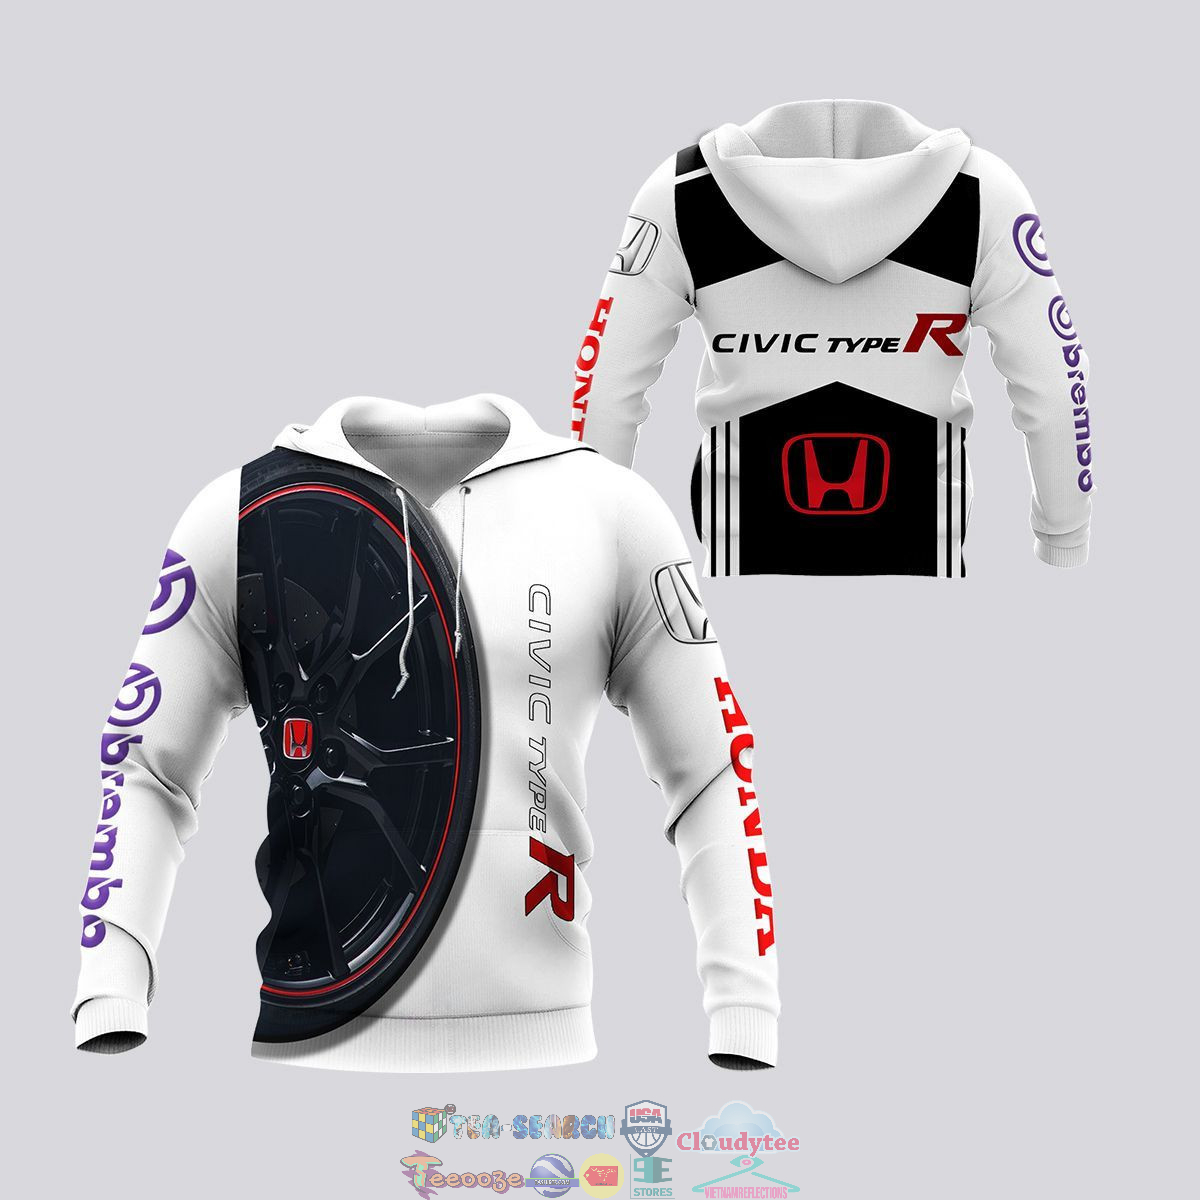 Honda Civic Type R ver 6 3D hoodie and t-shirt – Saleoff